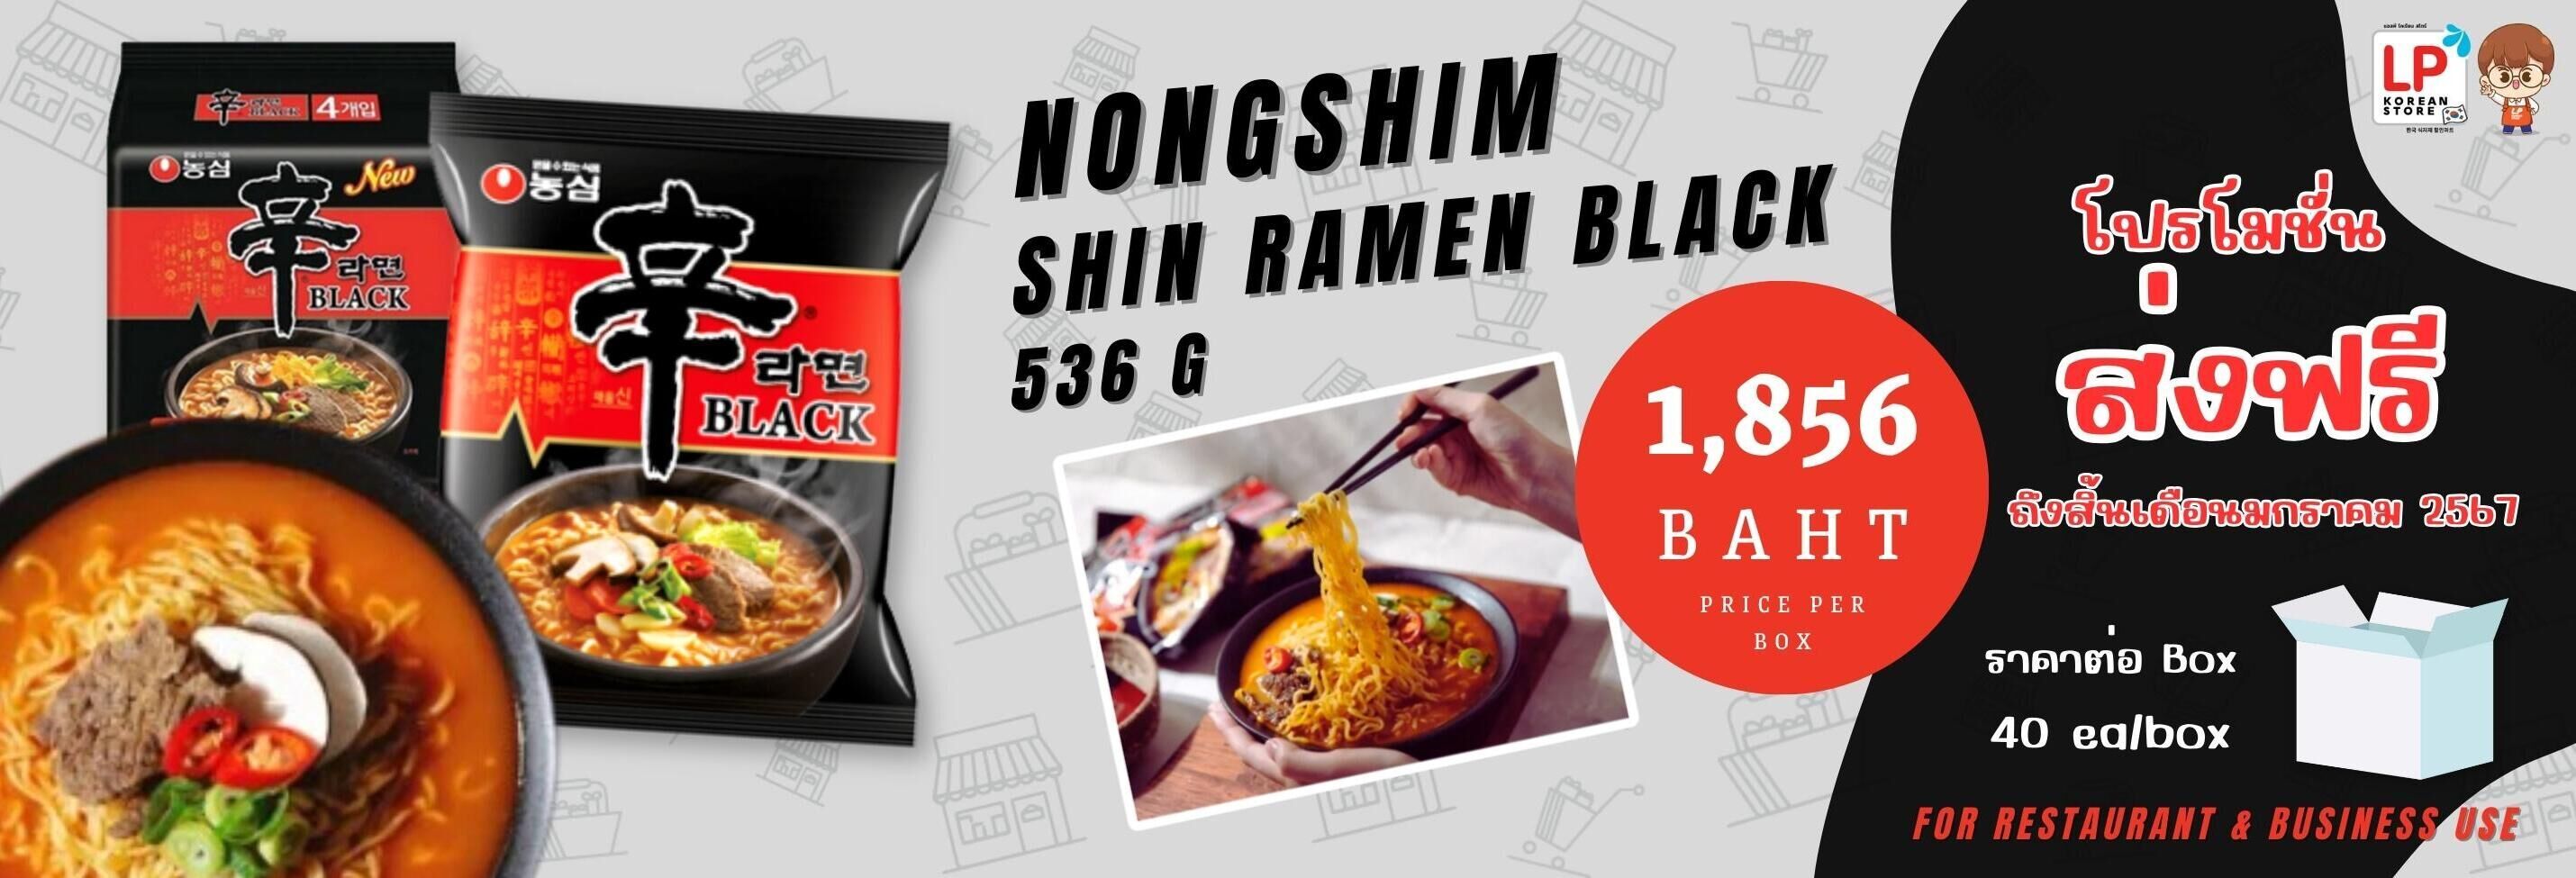 nongshim shin ramen black